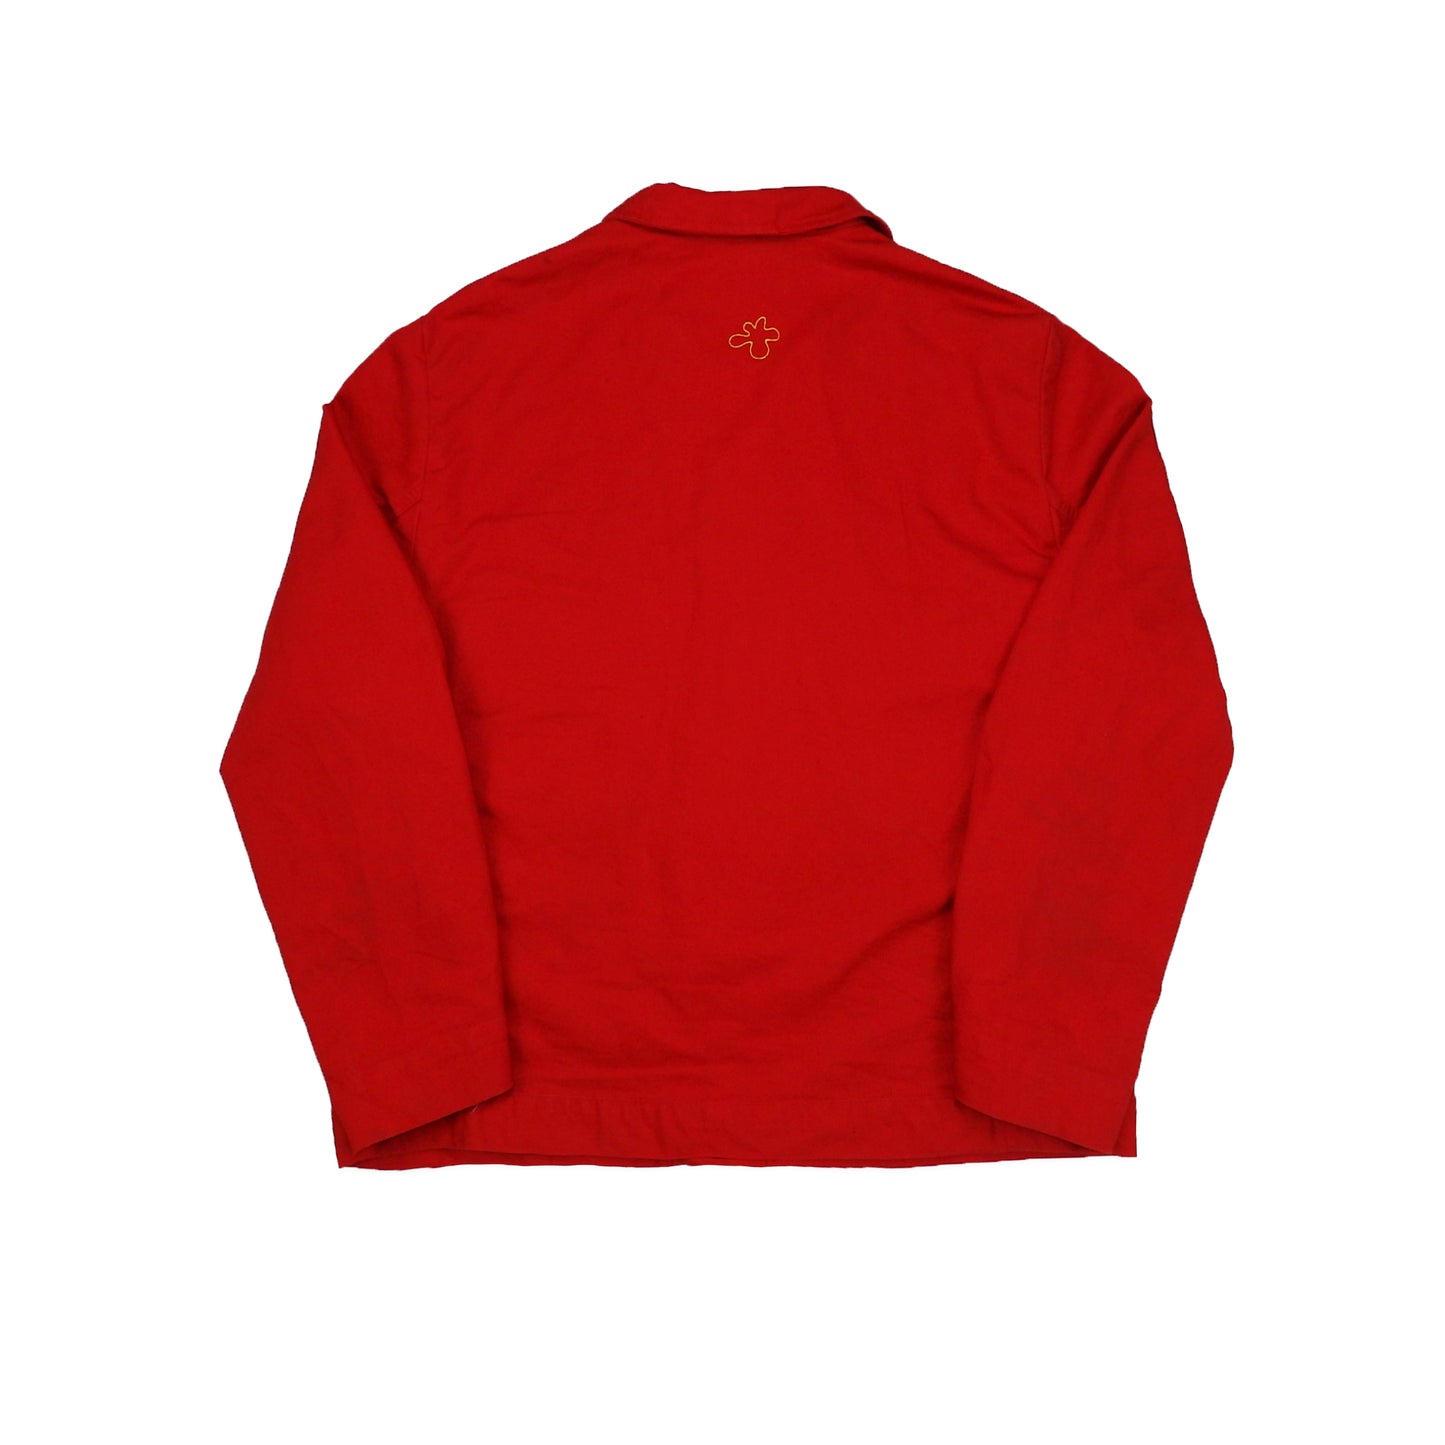 Custard Reclaimed Red Chore Jacket | Size Large